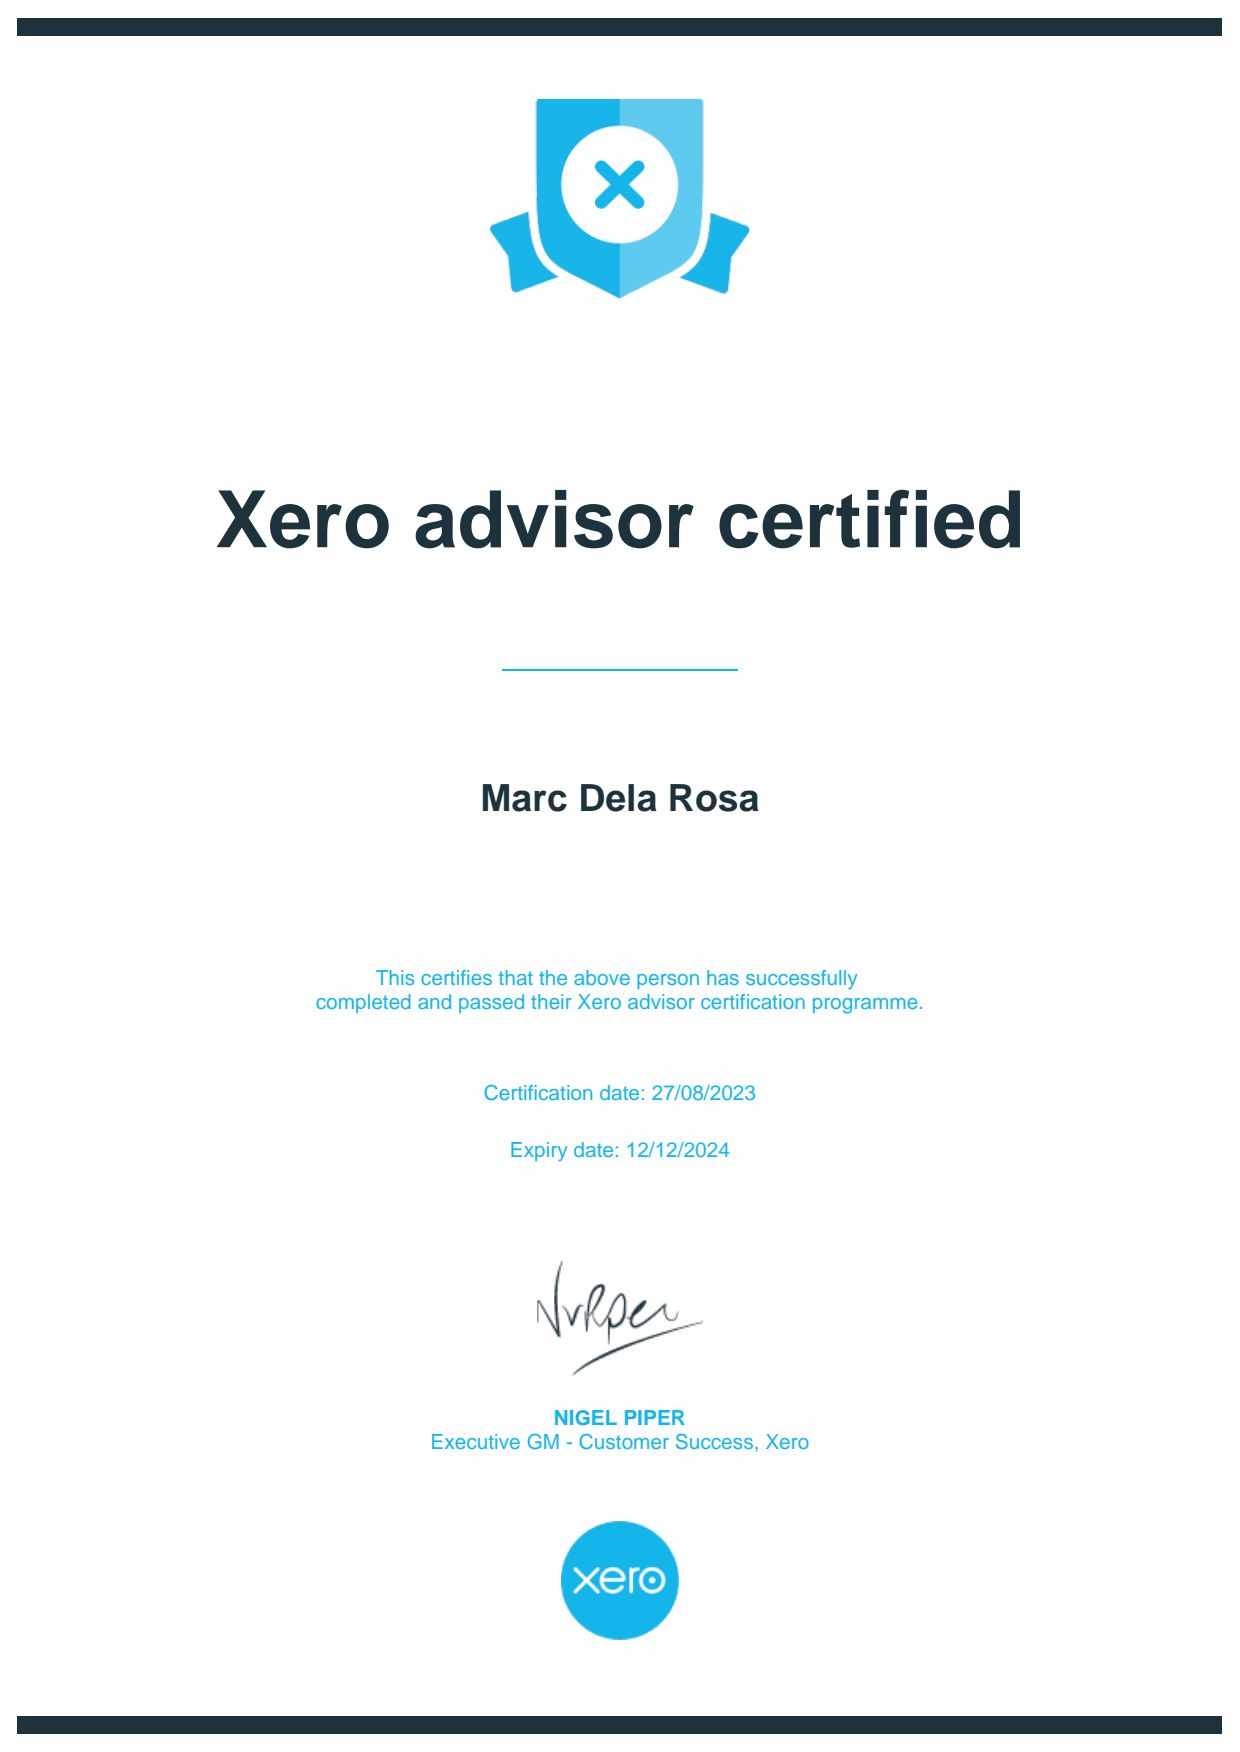 Xero Advisor Certificate